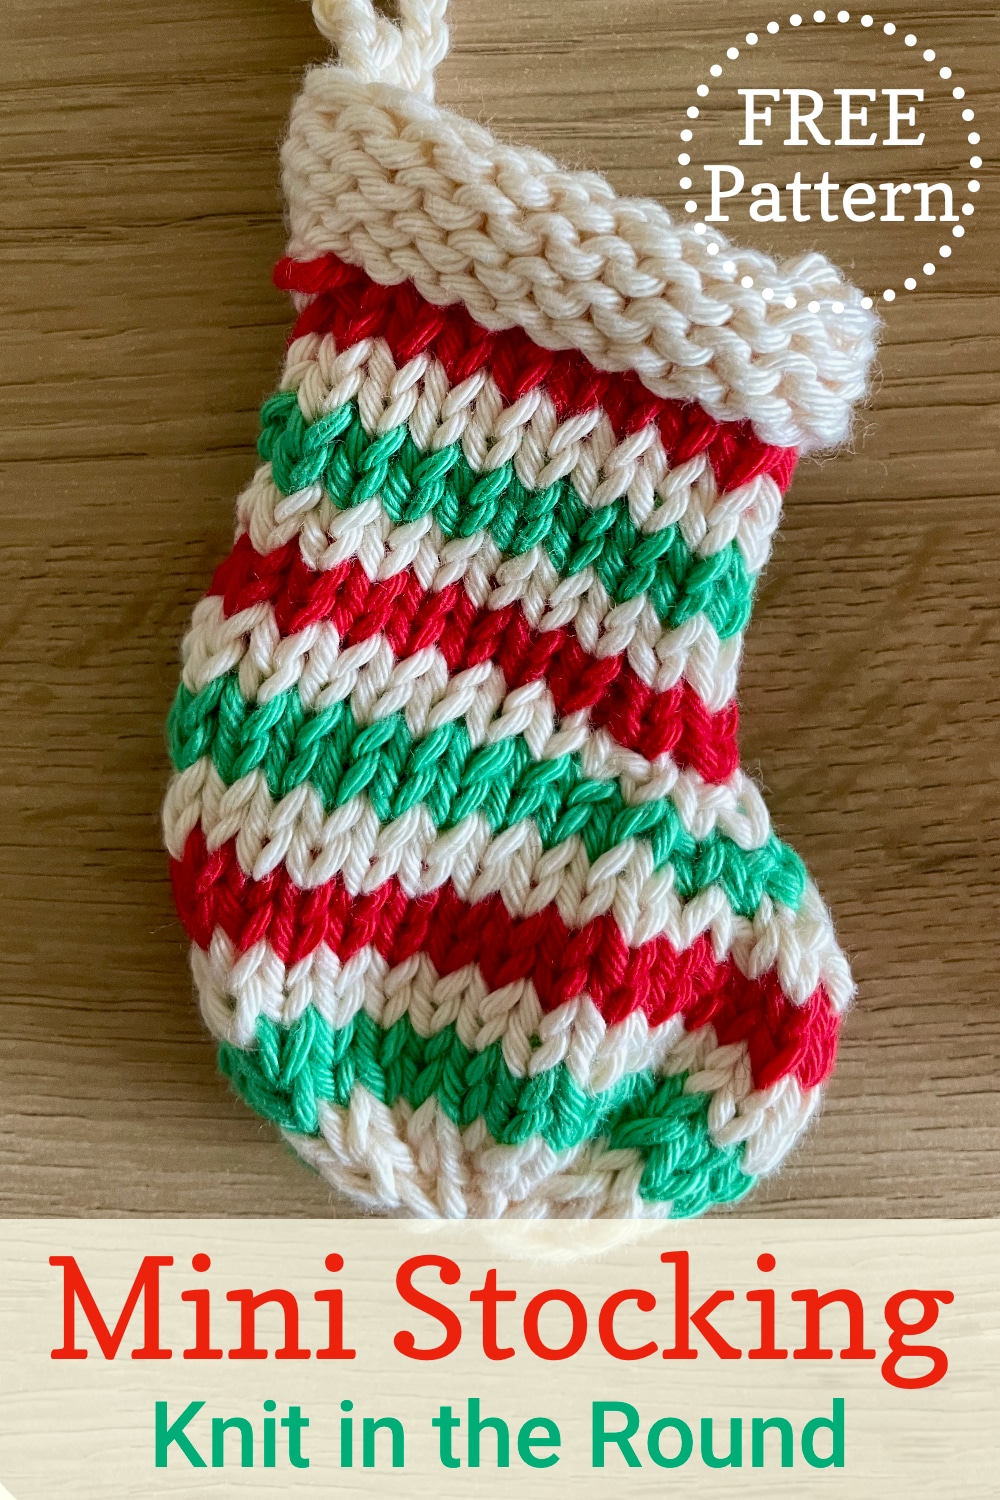 Mini Stocking knit in the round free pattern pin